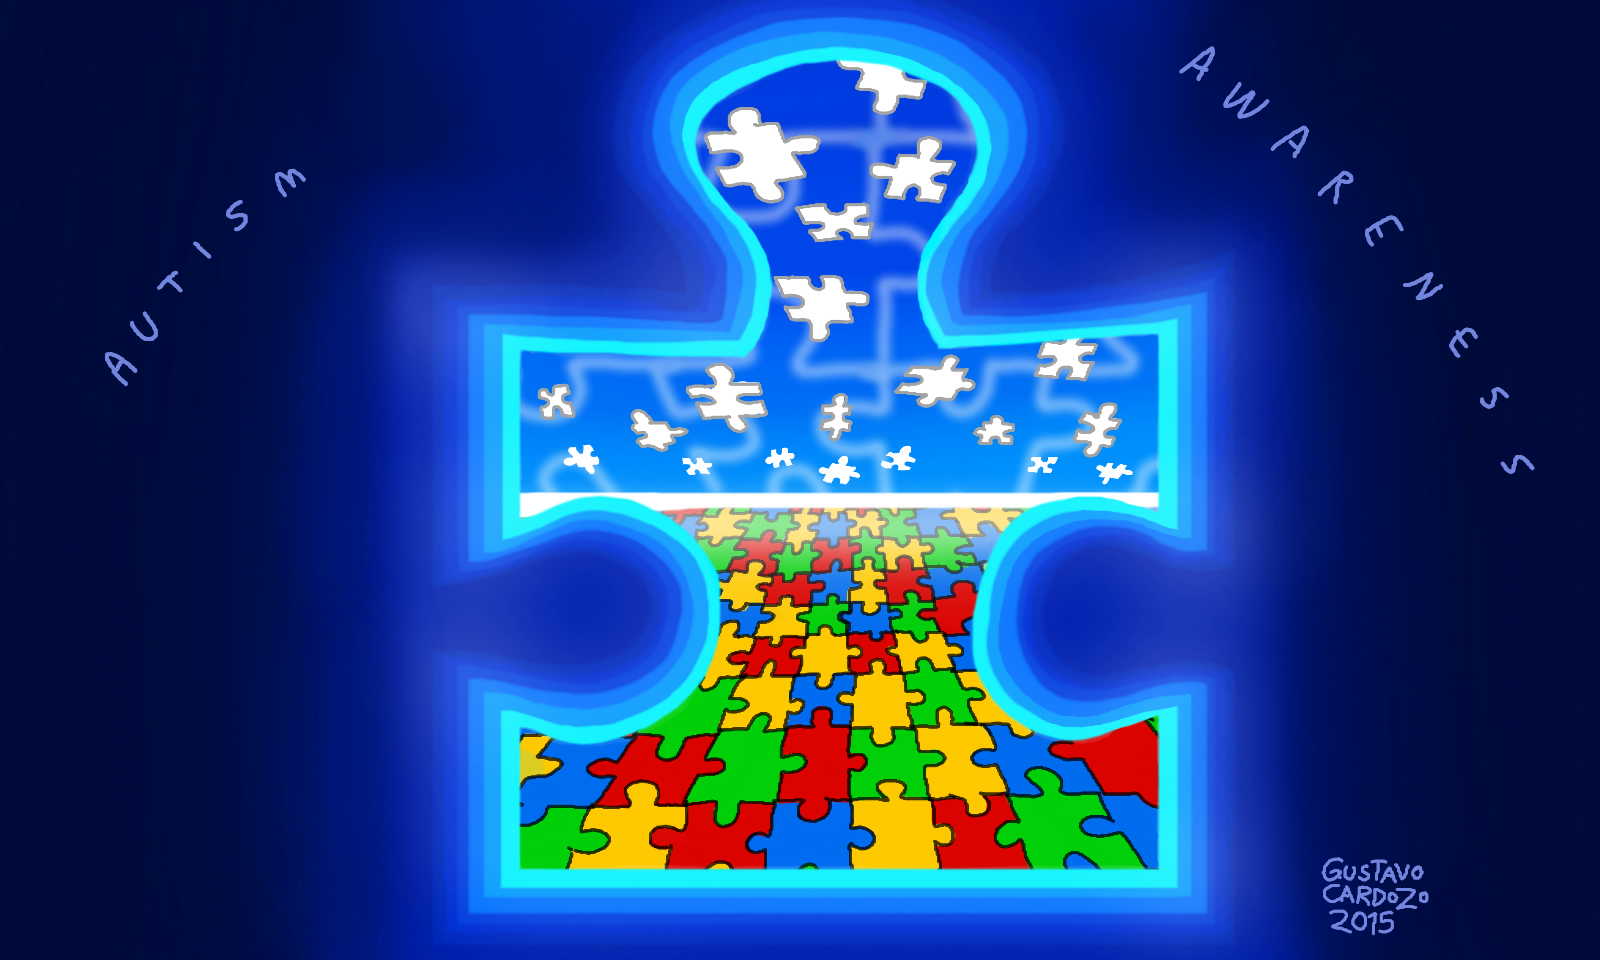 Autism Wallpaper Free Autism Background